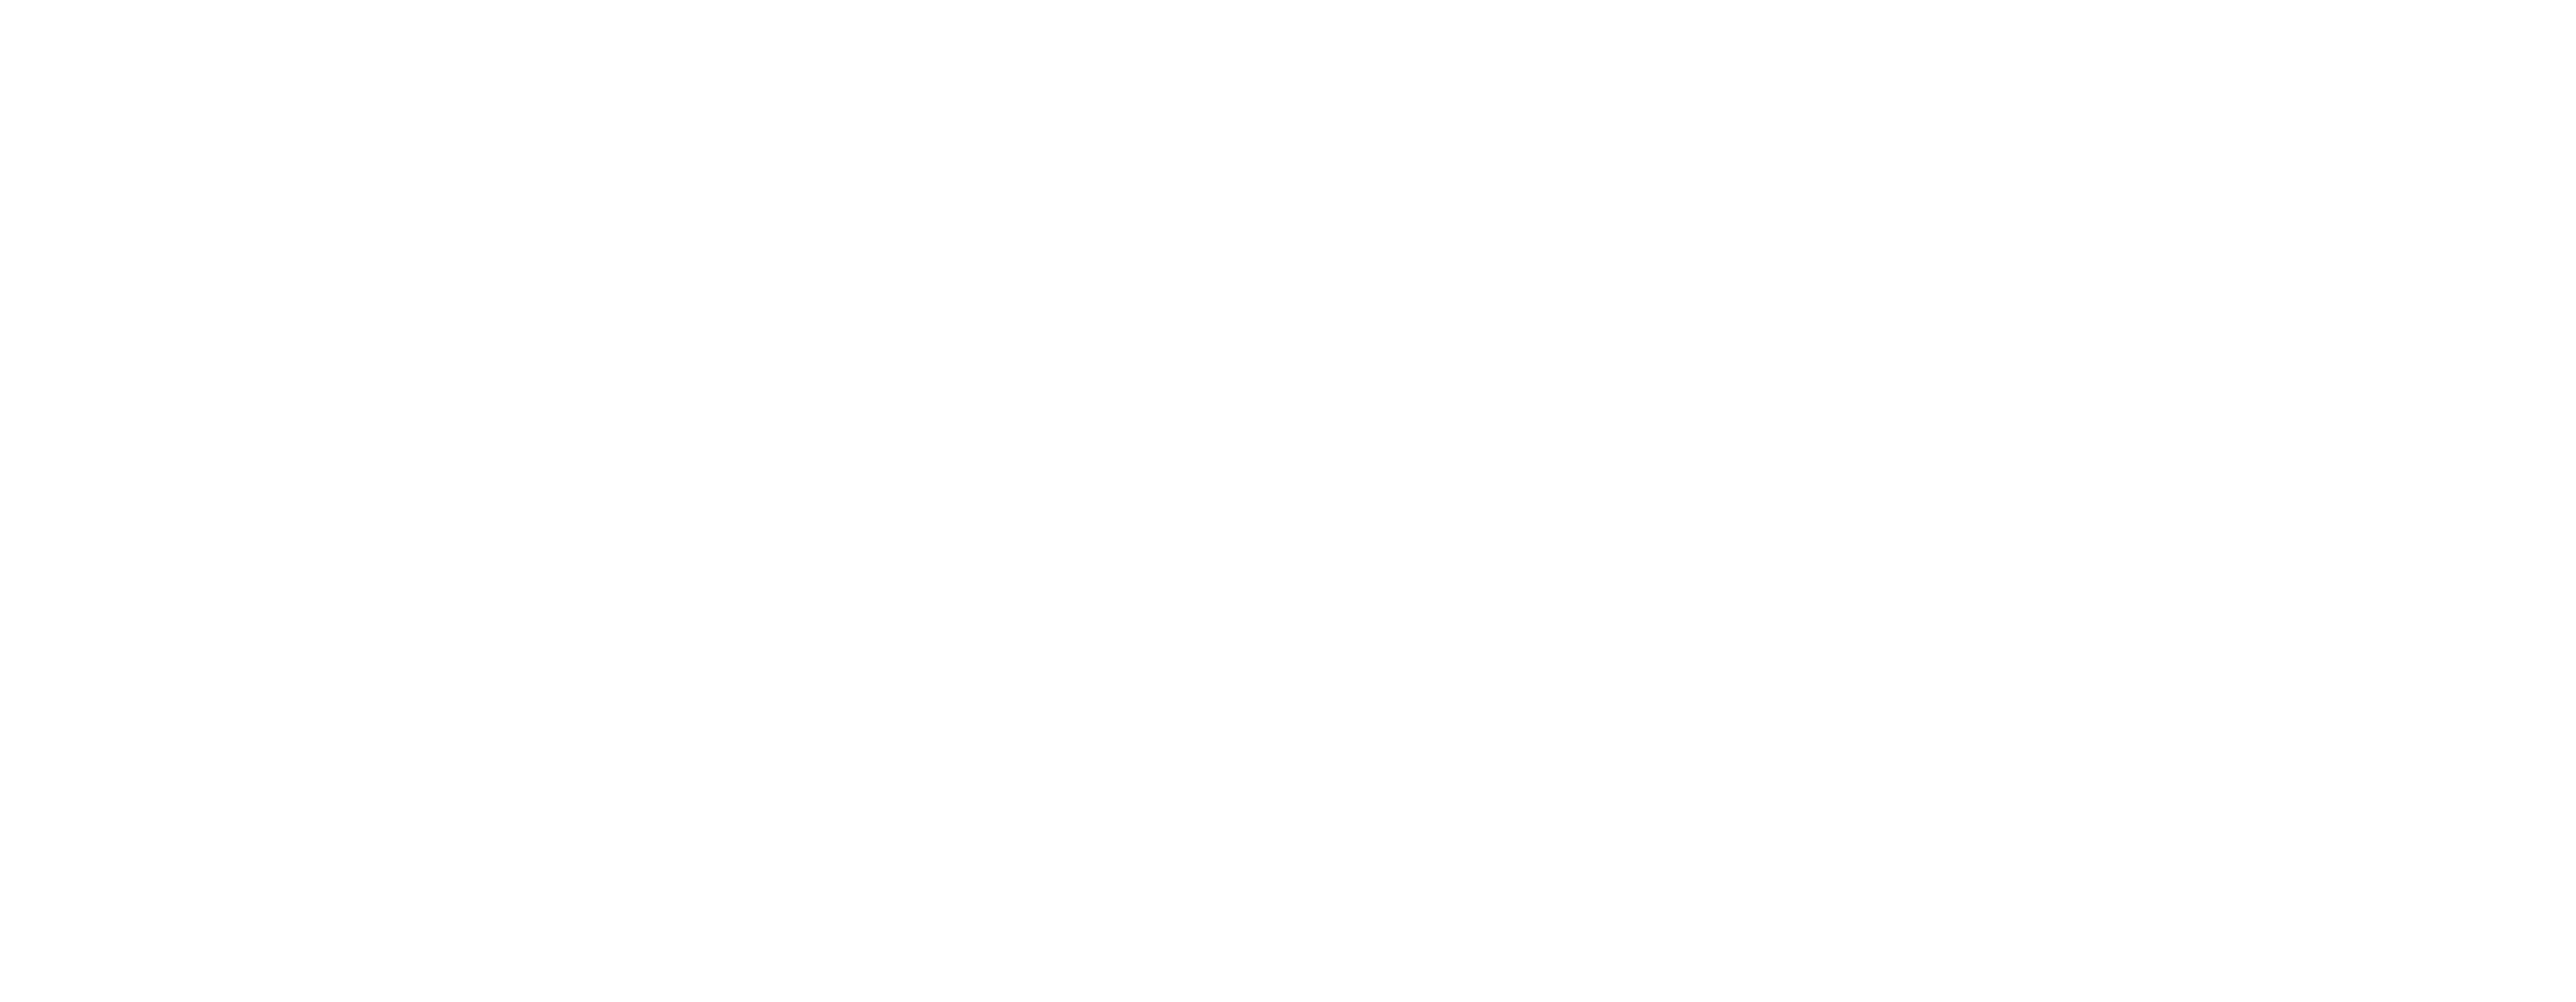 San Francisco Planning Department